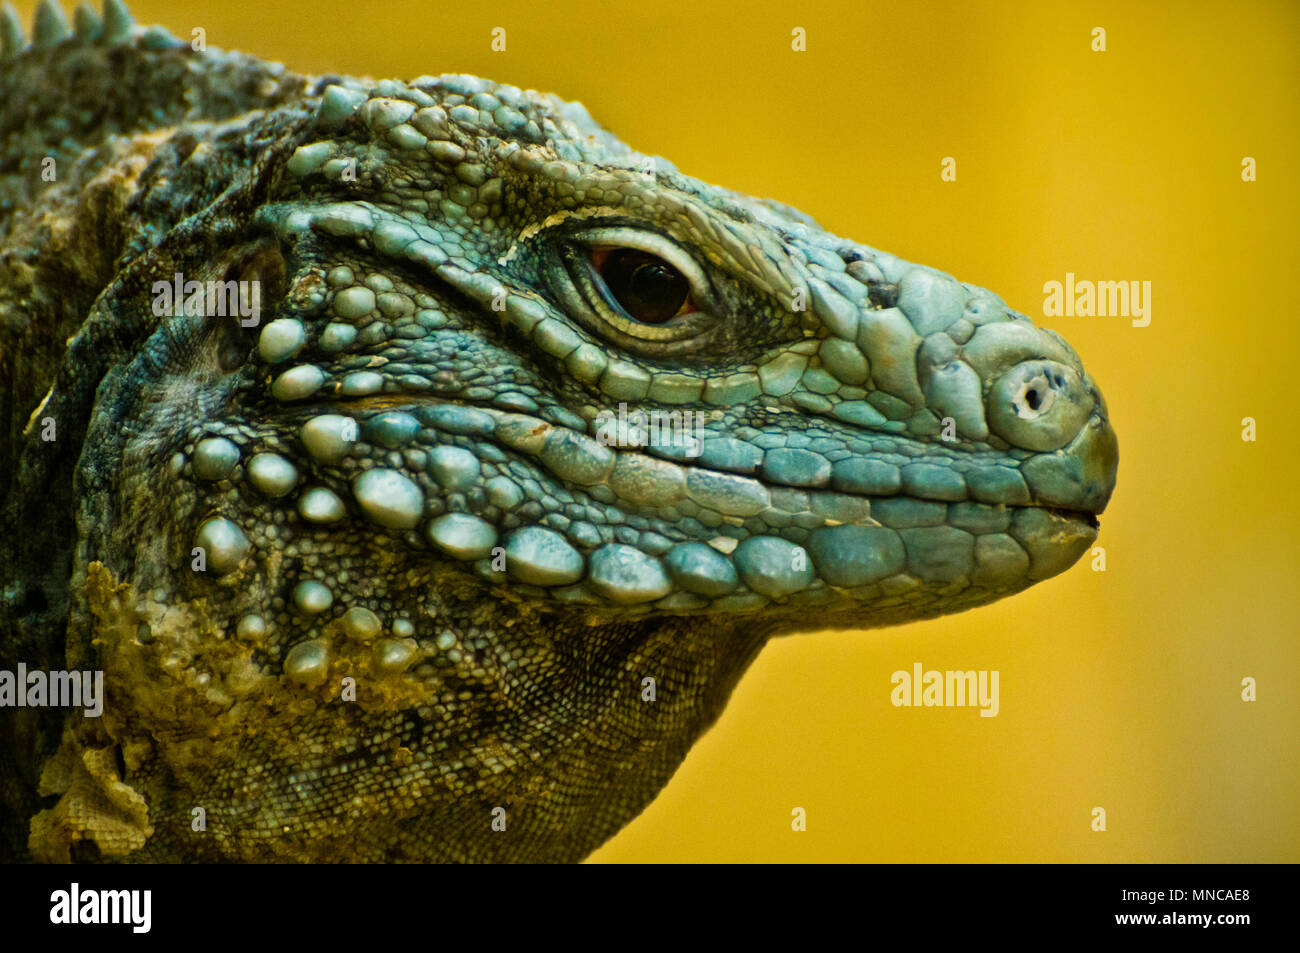 Kubanische rock Iguana oder Cyclura nubila in Gefangenschaft Stockfoto